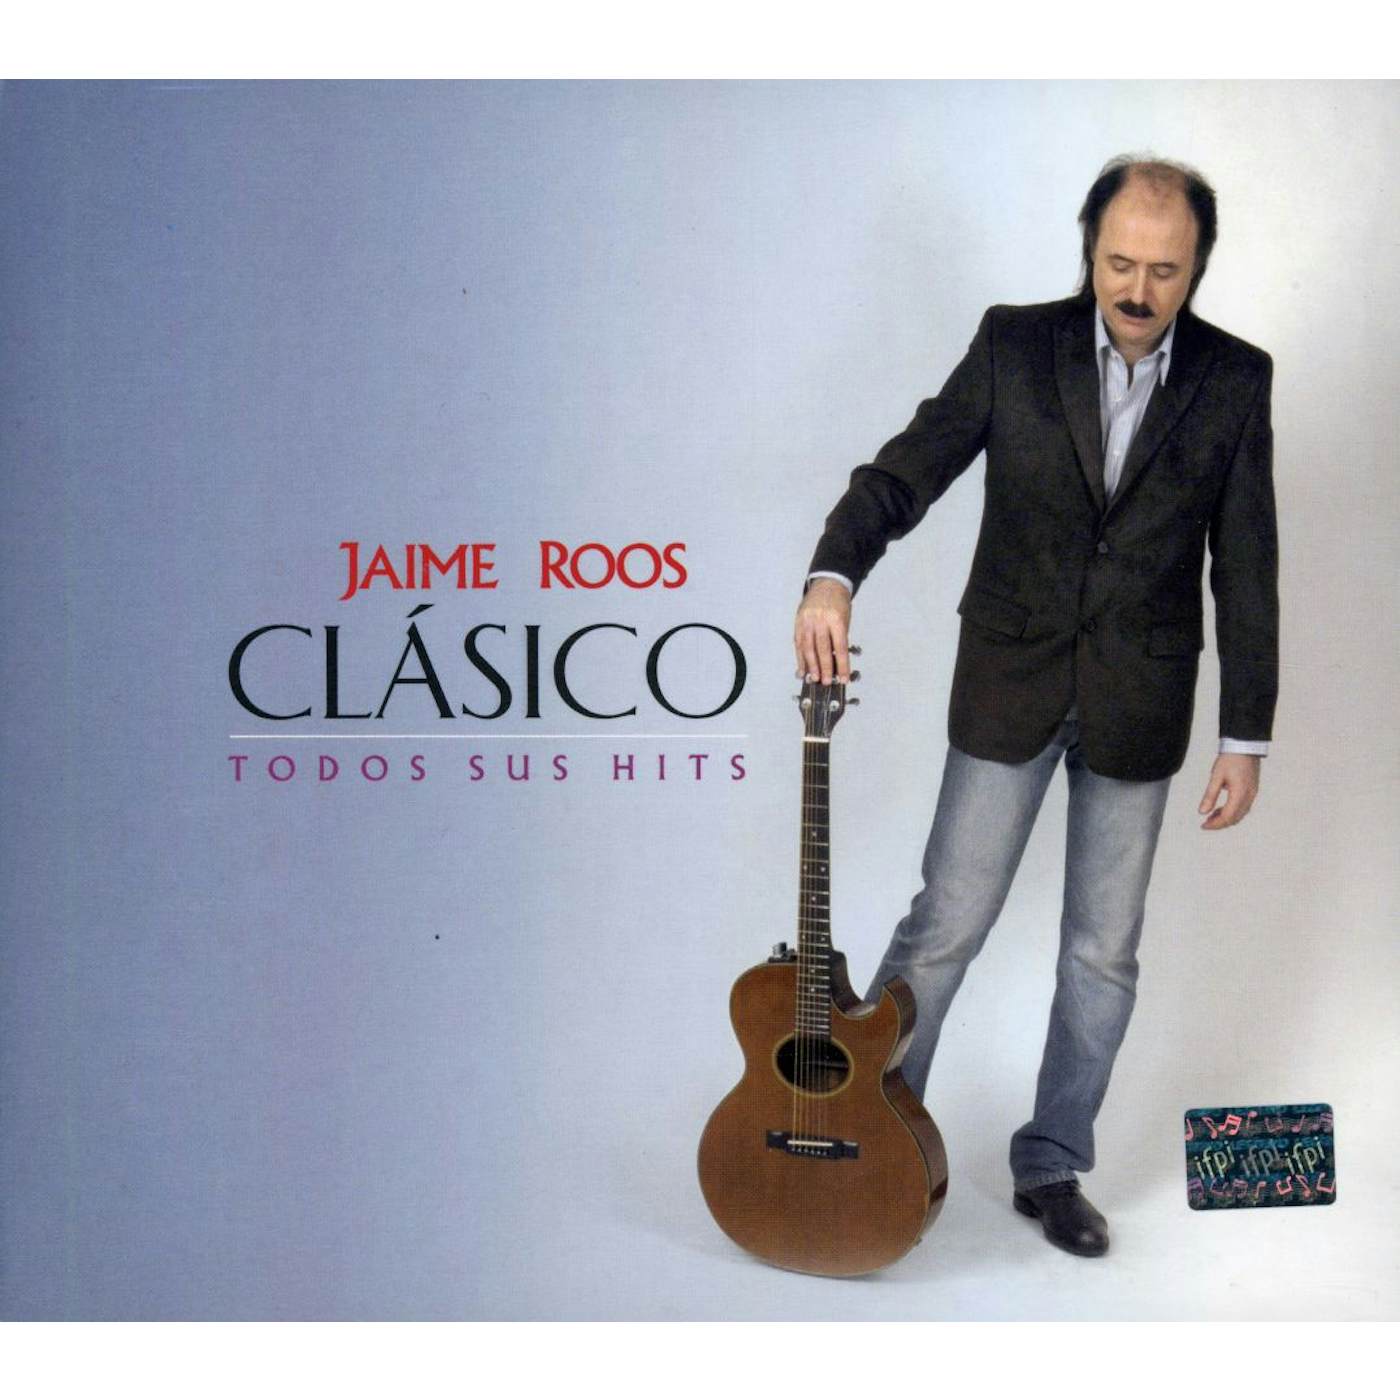 Jaime Roos CLASICO CD